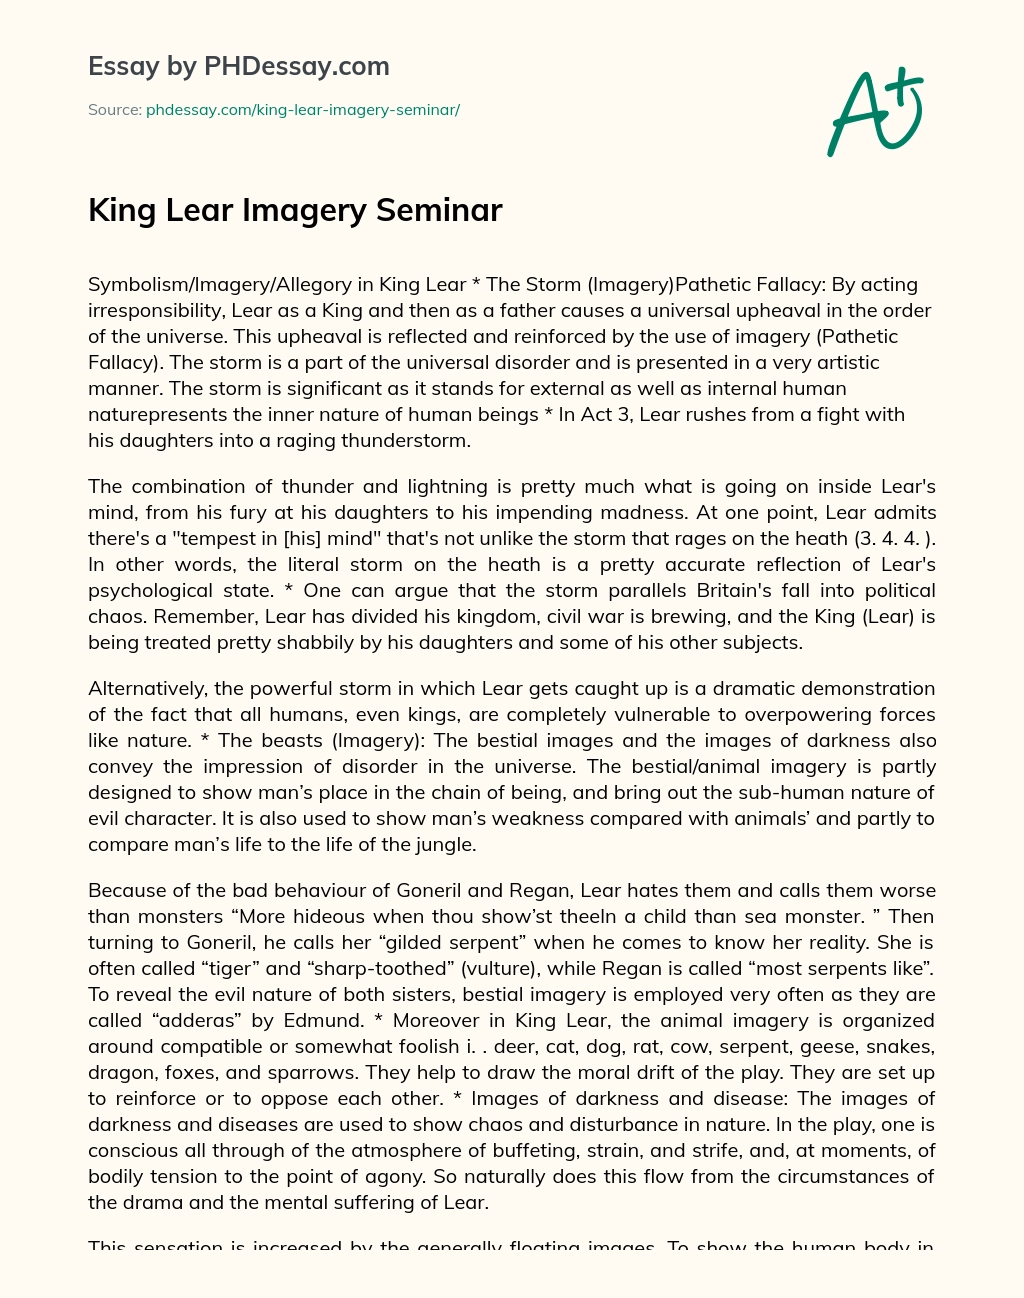 King Lear Imagery Seminar essay